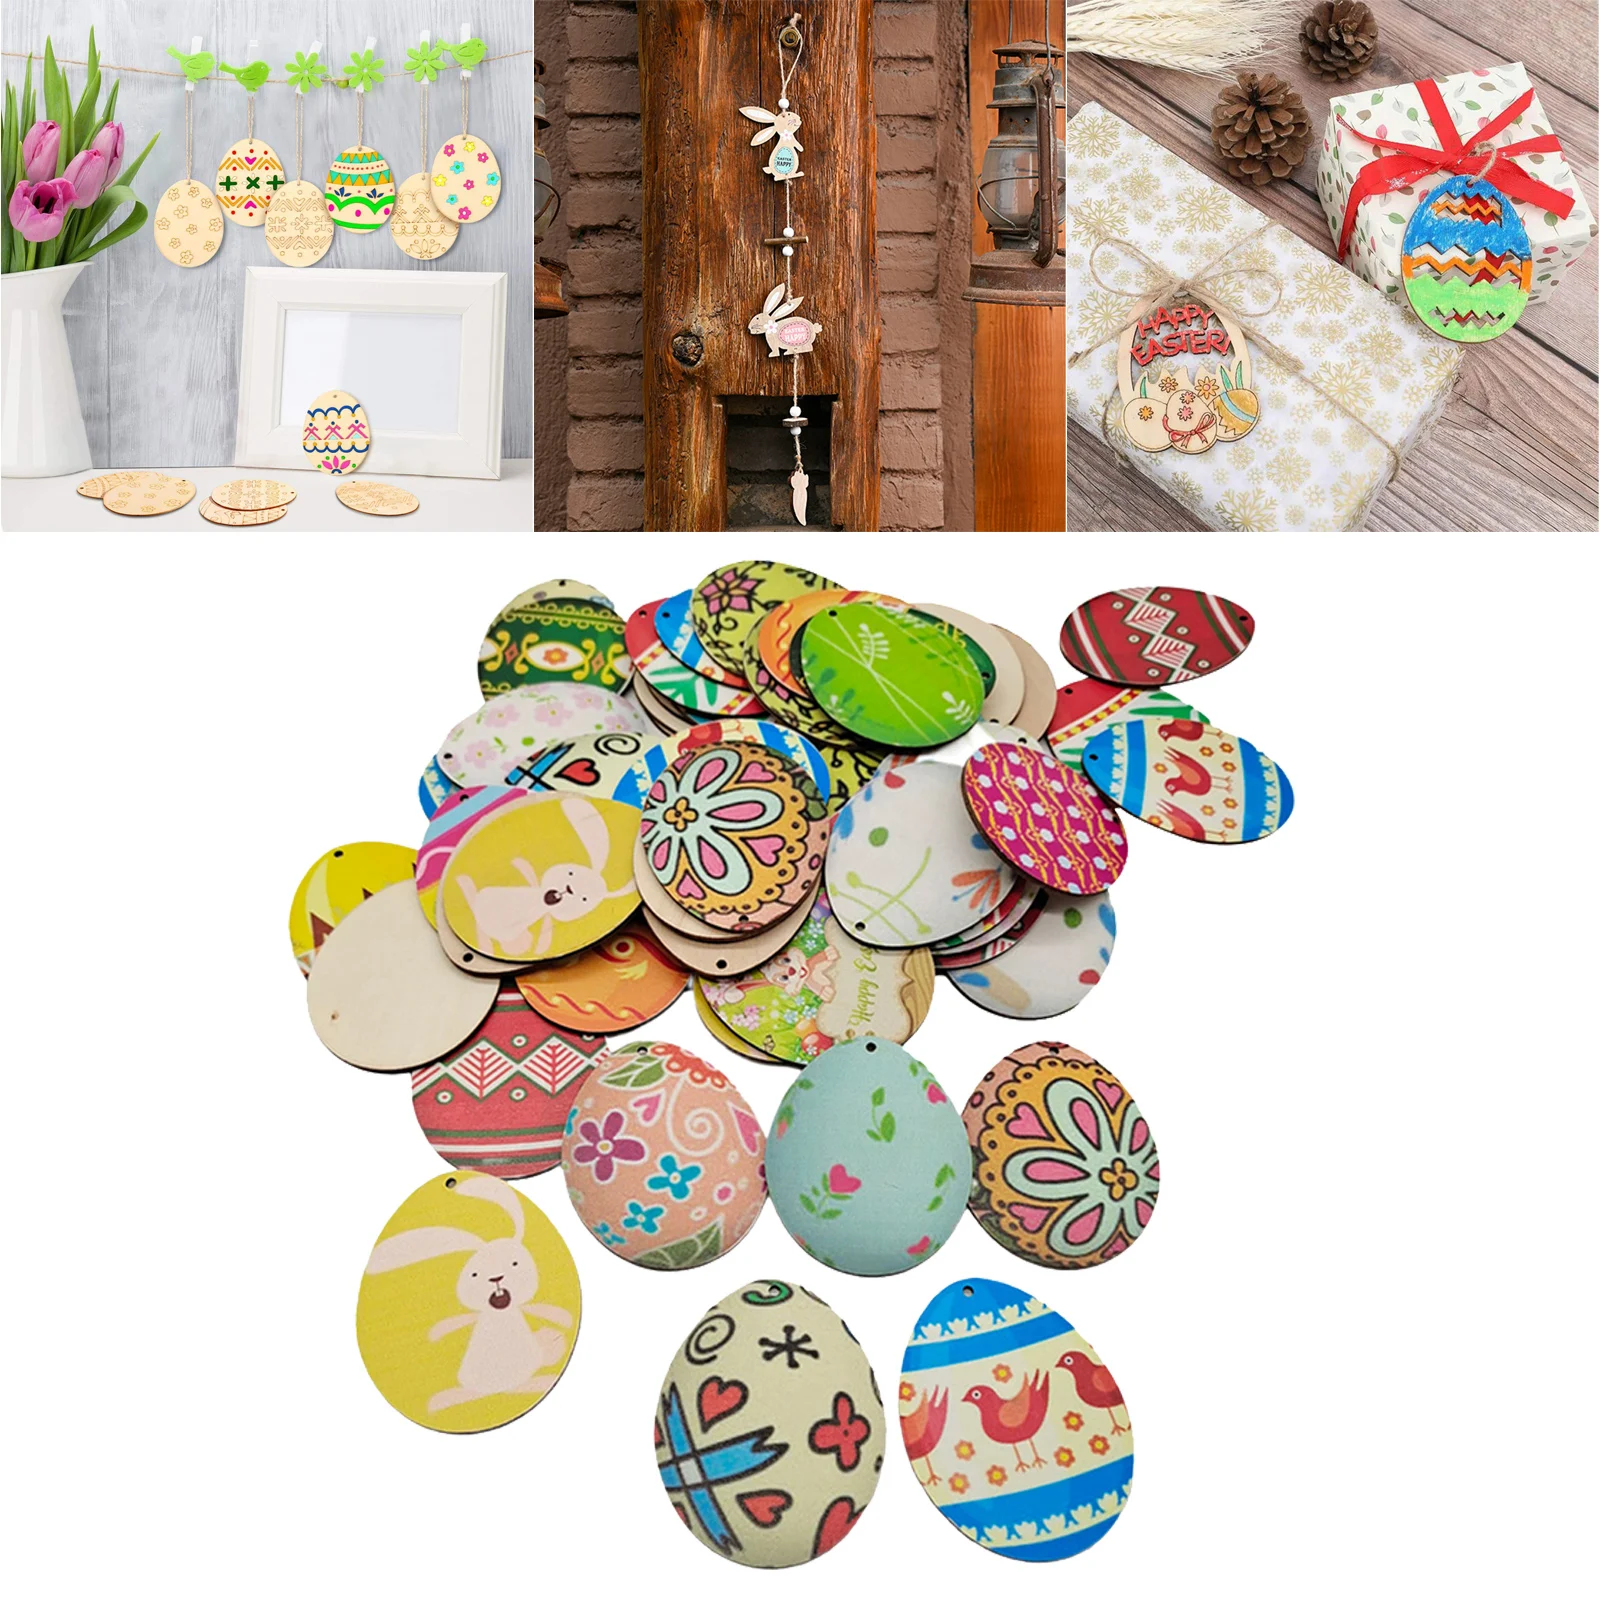 50Pcs Easter Egg Shaped Hanging Bonnet Decorating Decorative Arts Crafts